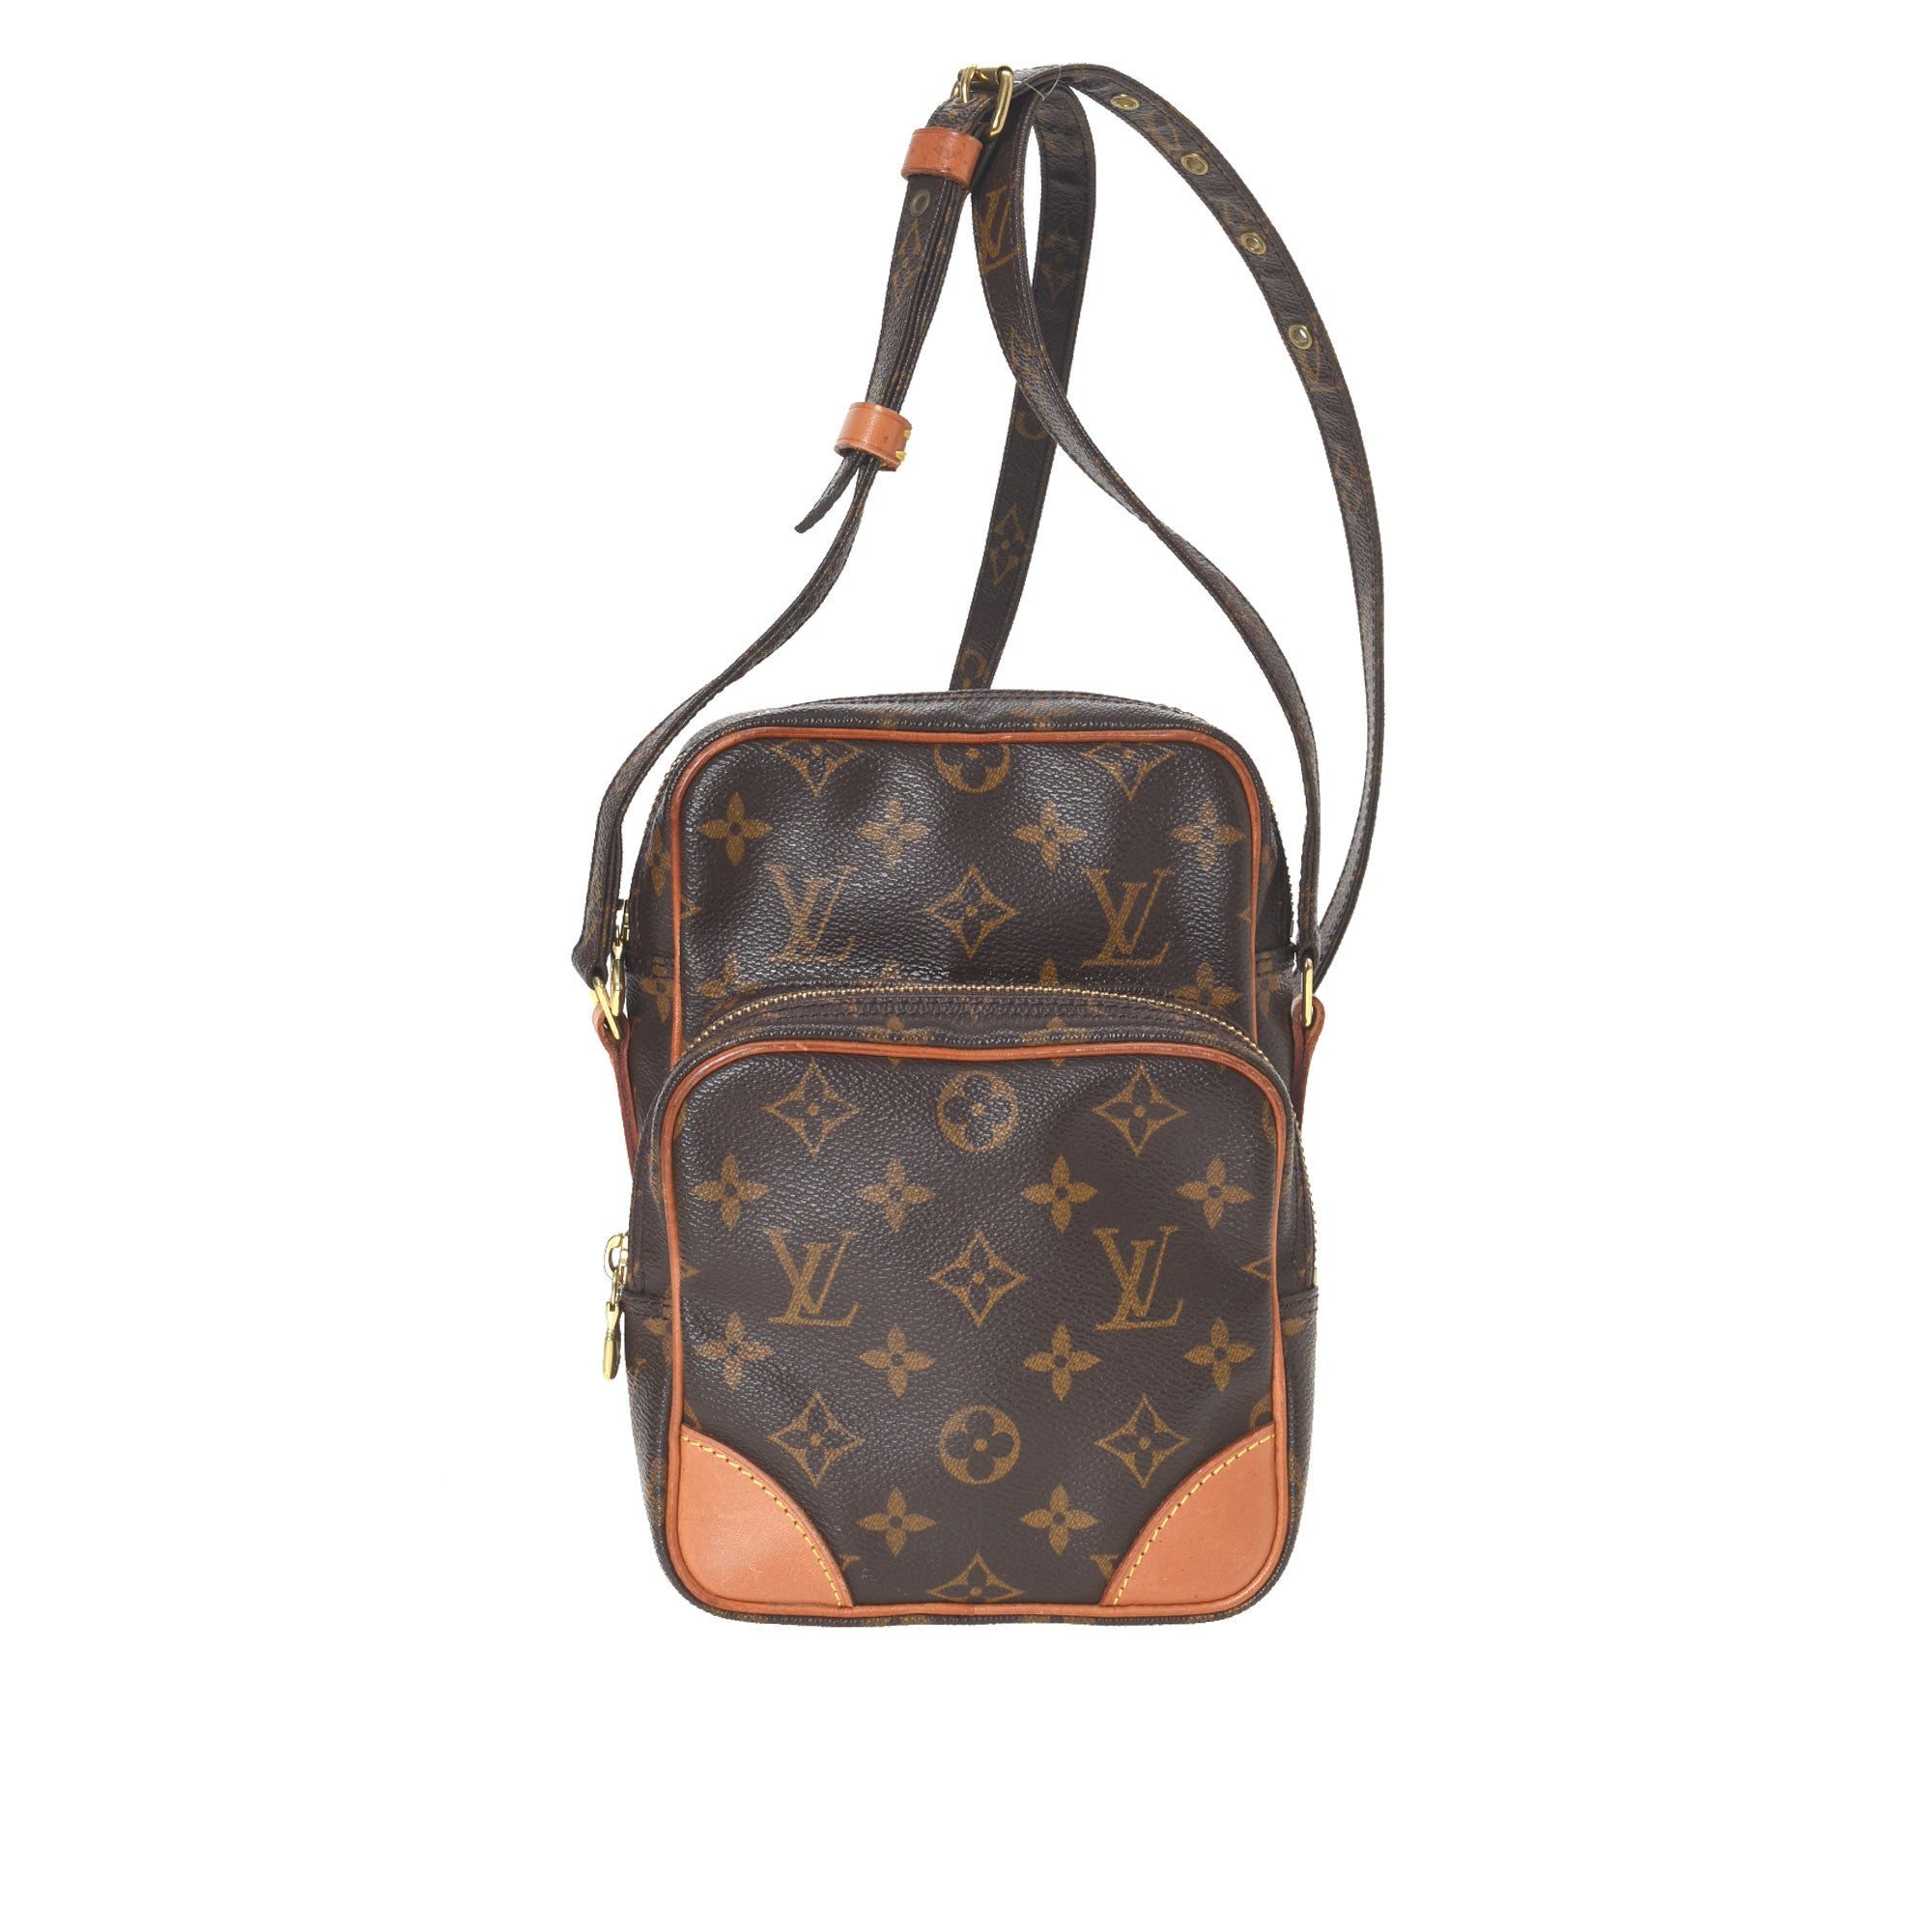 ❌SOLD❌ Louis Vuitton CABAS - The Royal Bags Canada Inc.